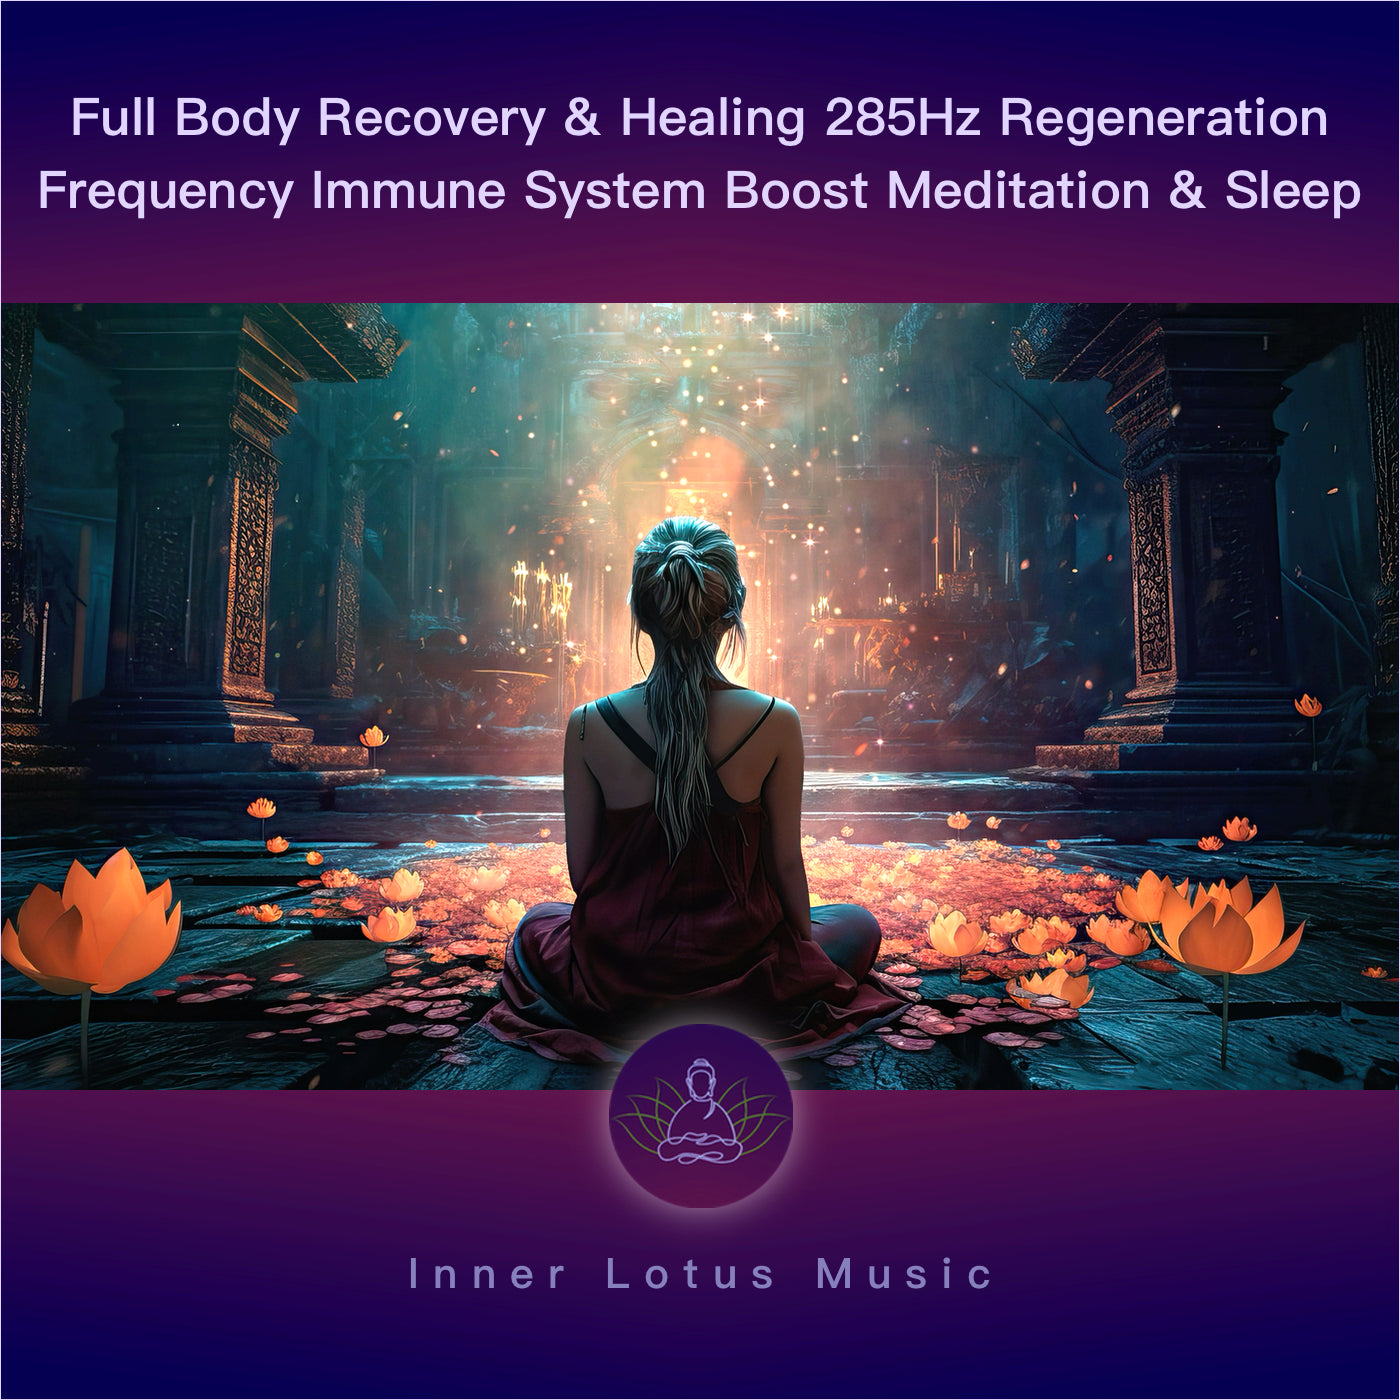 Full Body Recovery & Healing | 285Hz Regeneration Frequency | Immune System Boost Meditation & Sleep